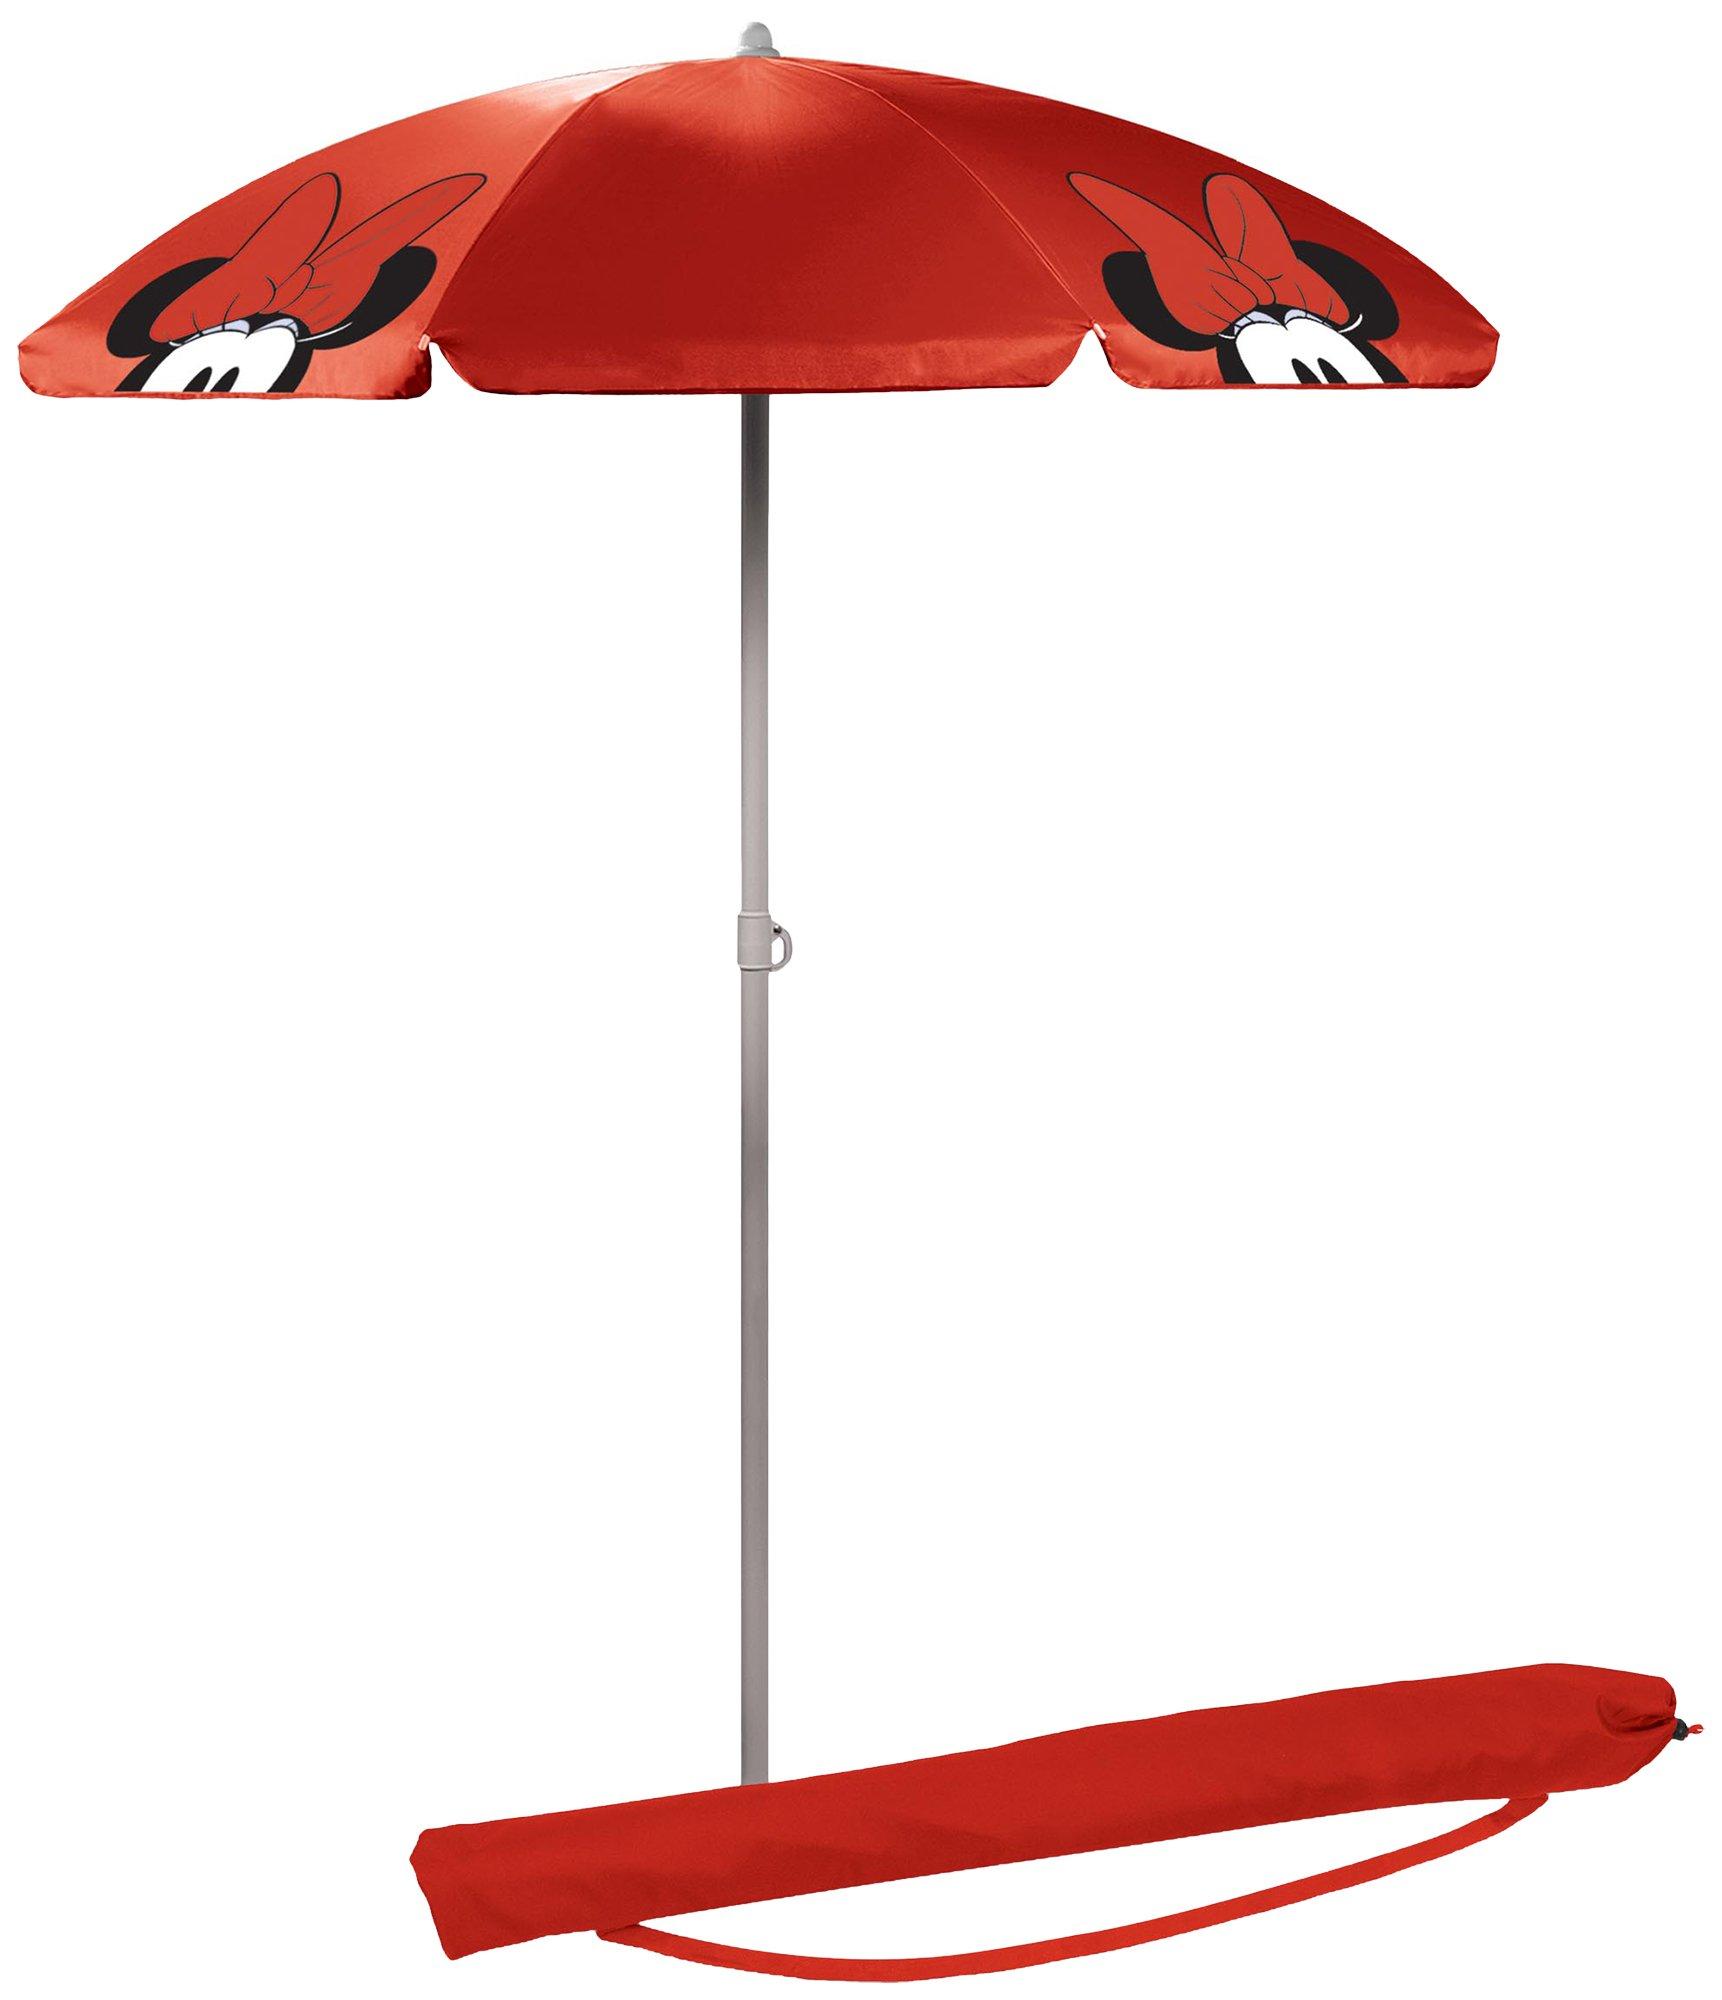 Minnie Mouse 5.5 Foot Portable Beach Umbrella